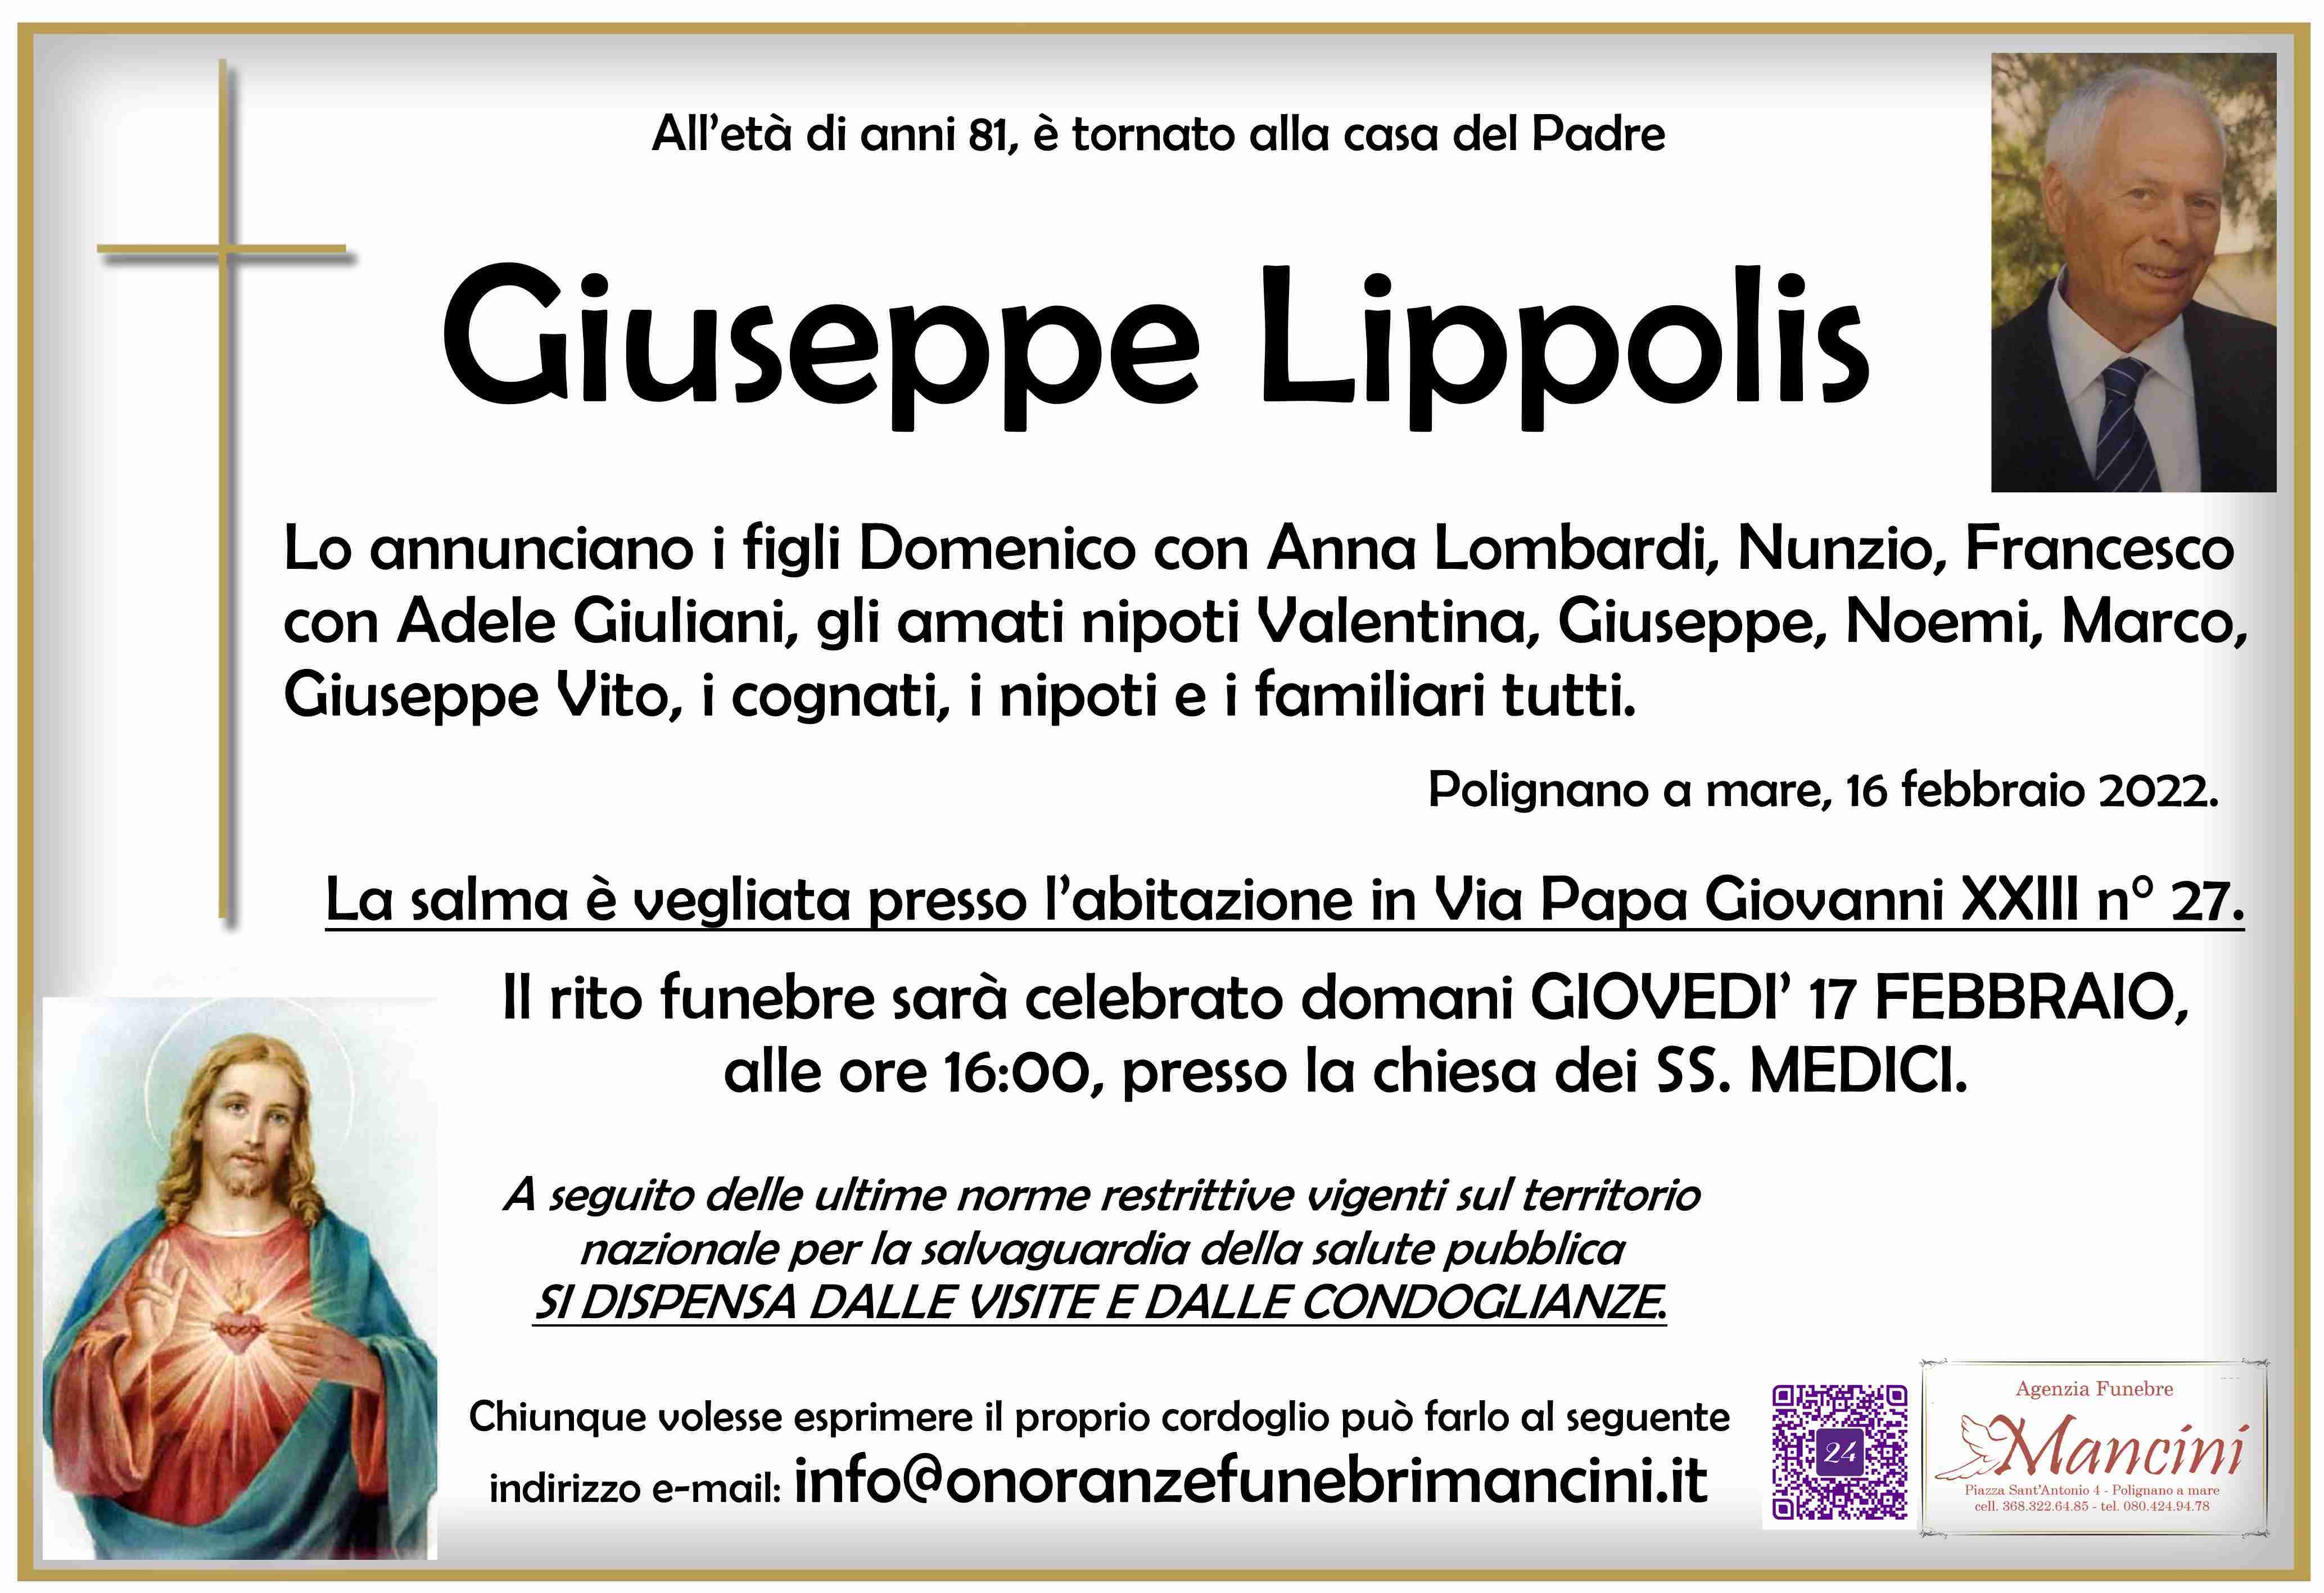 Giuseppe Lippolis